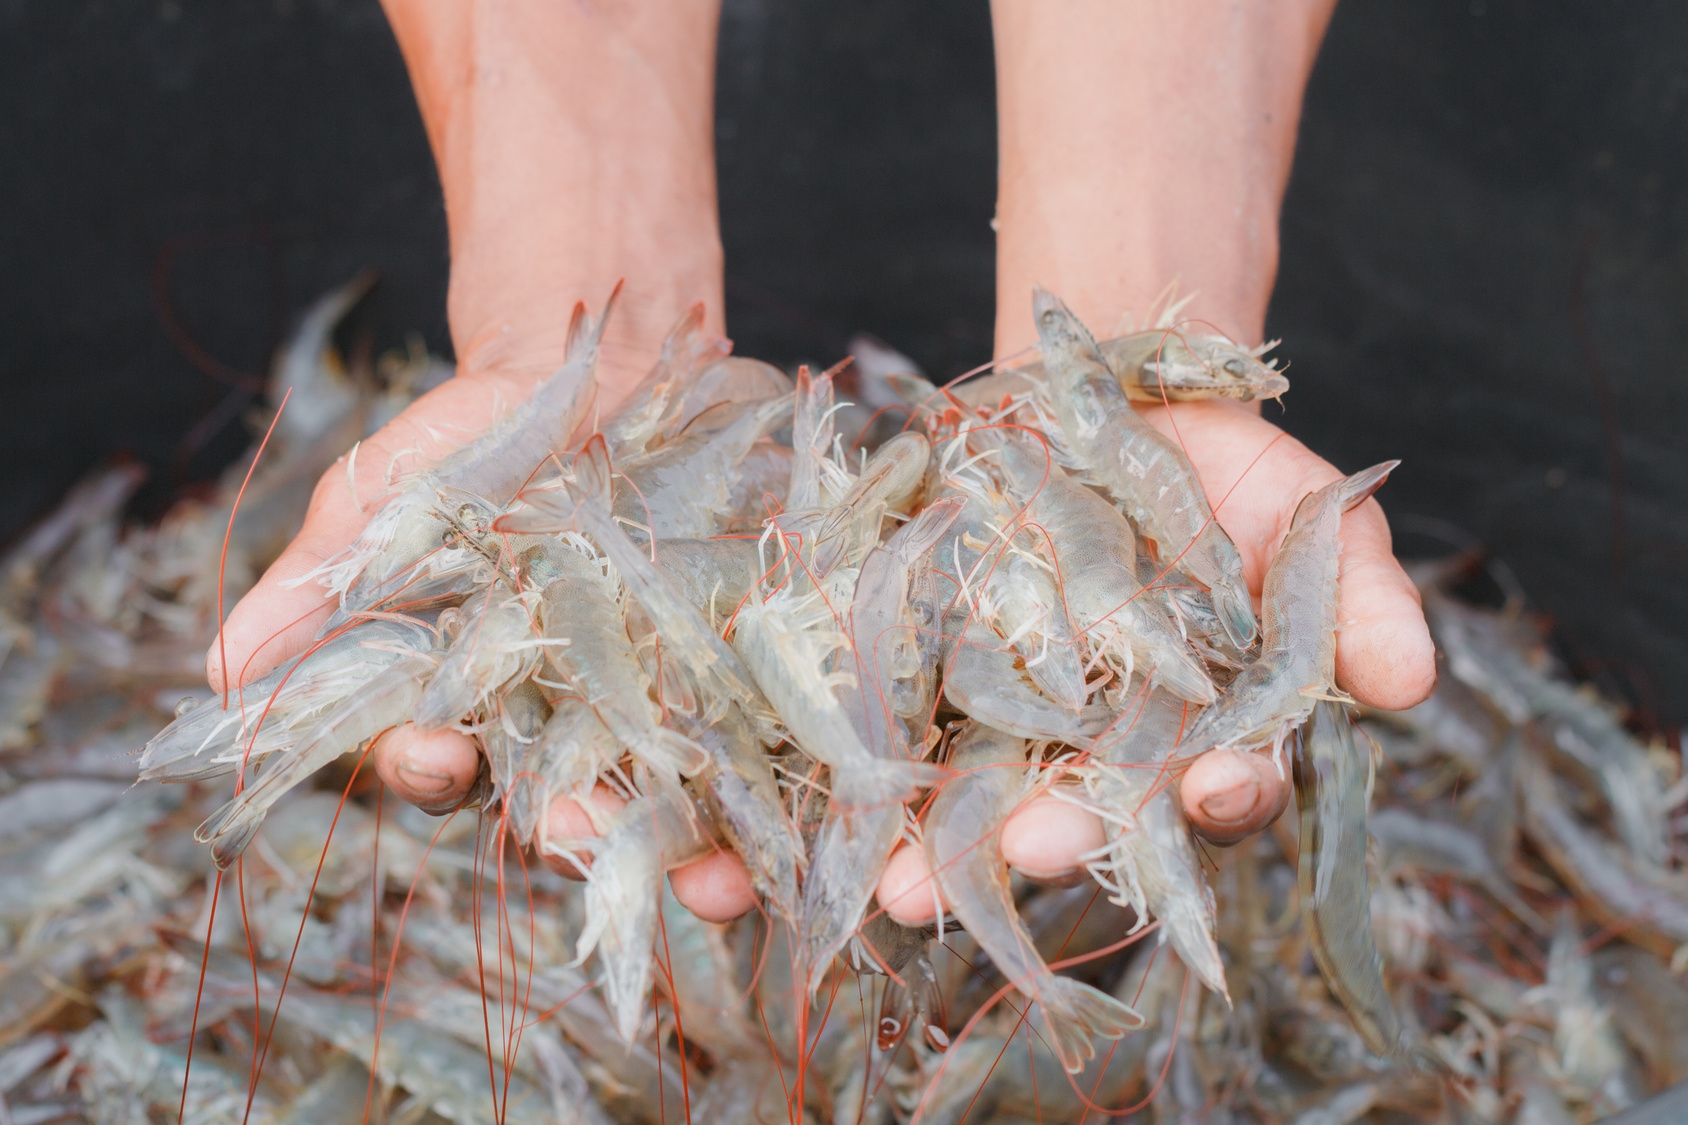 Additional health benefits discovered for shrimp aquaculture - Hatchery International